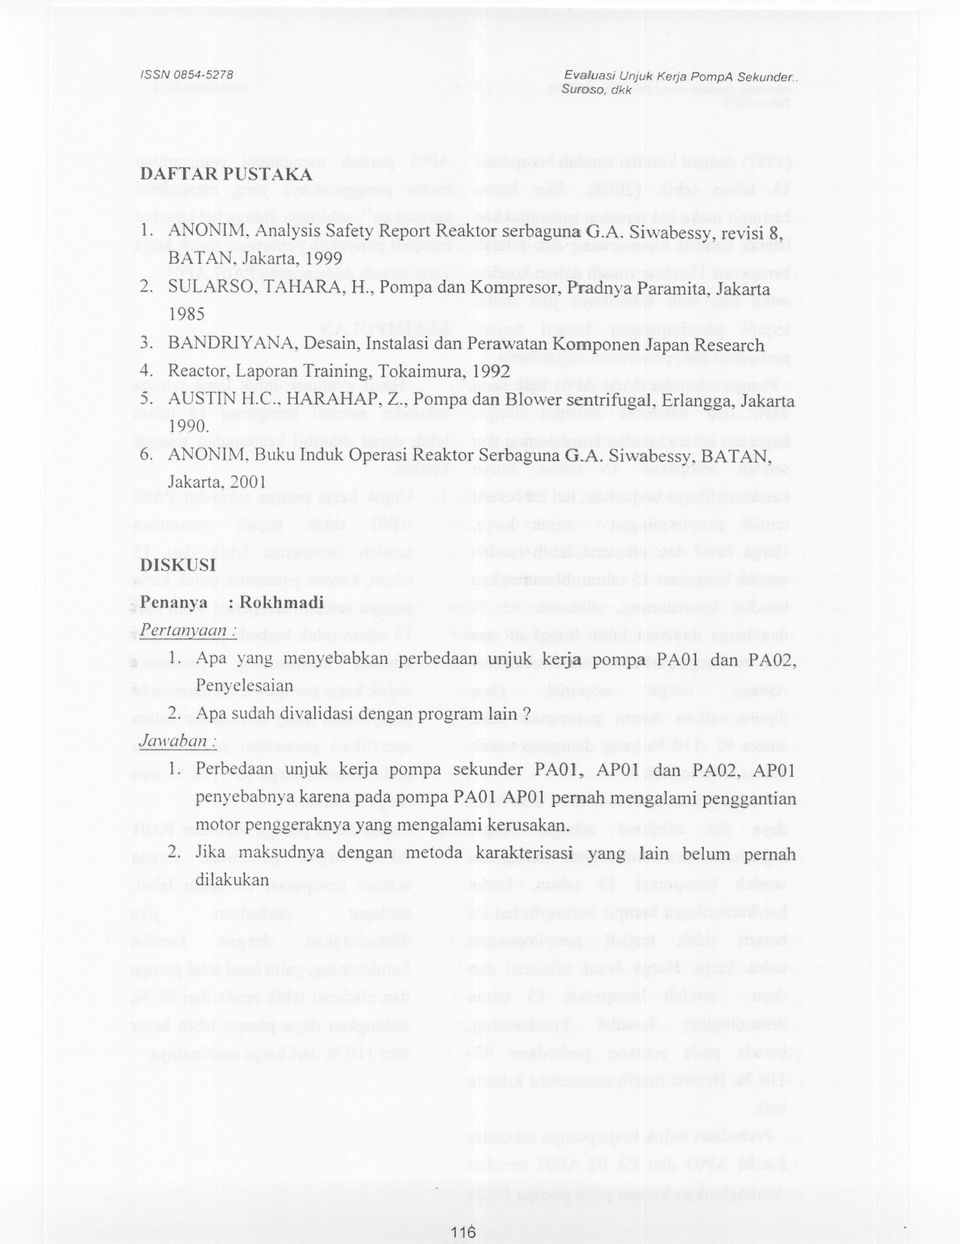 , Pompa clanblower sentrfuga, Erlangga, Jakarta 1990. 6. ANONM, Buku nduk Operas Reaktor Serbaguna G.A. Swabessy, BATAN, Jakarta, 2001 DSKUS Penanya Pertanyaan : : Rokhmad 1.